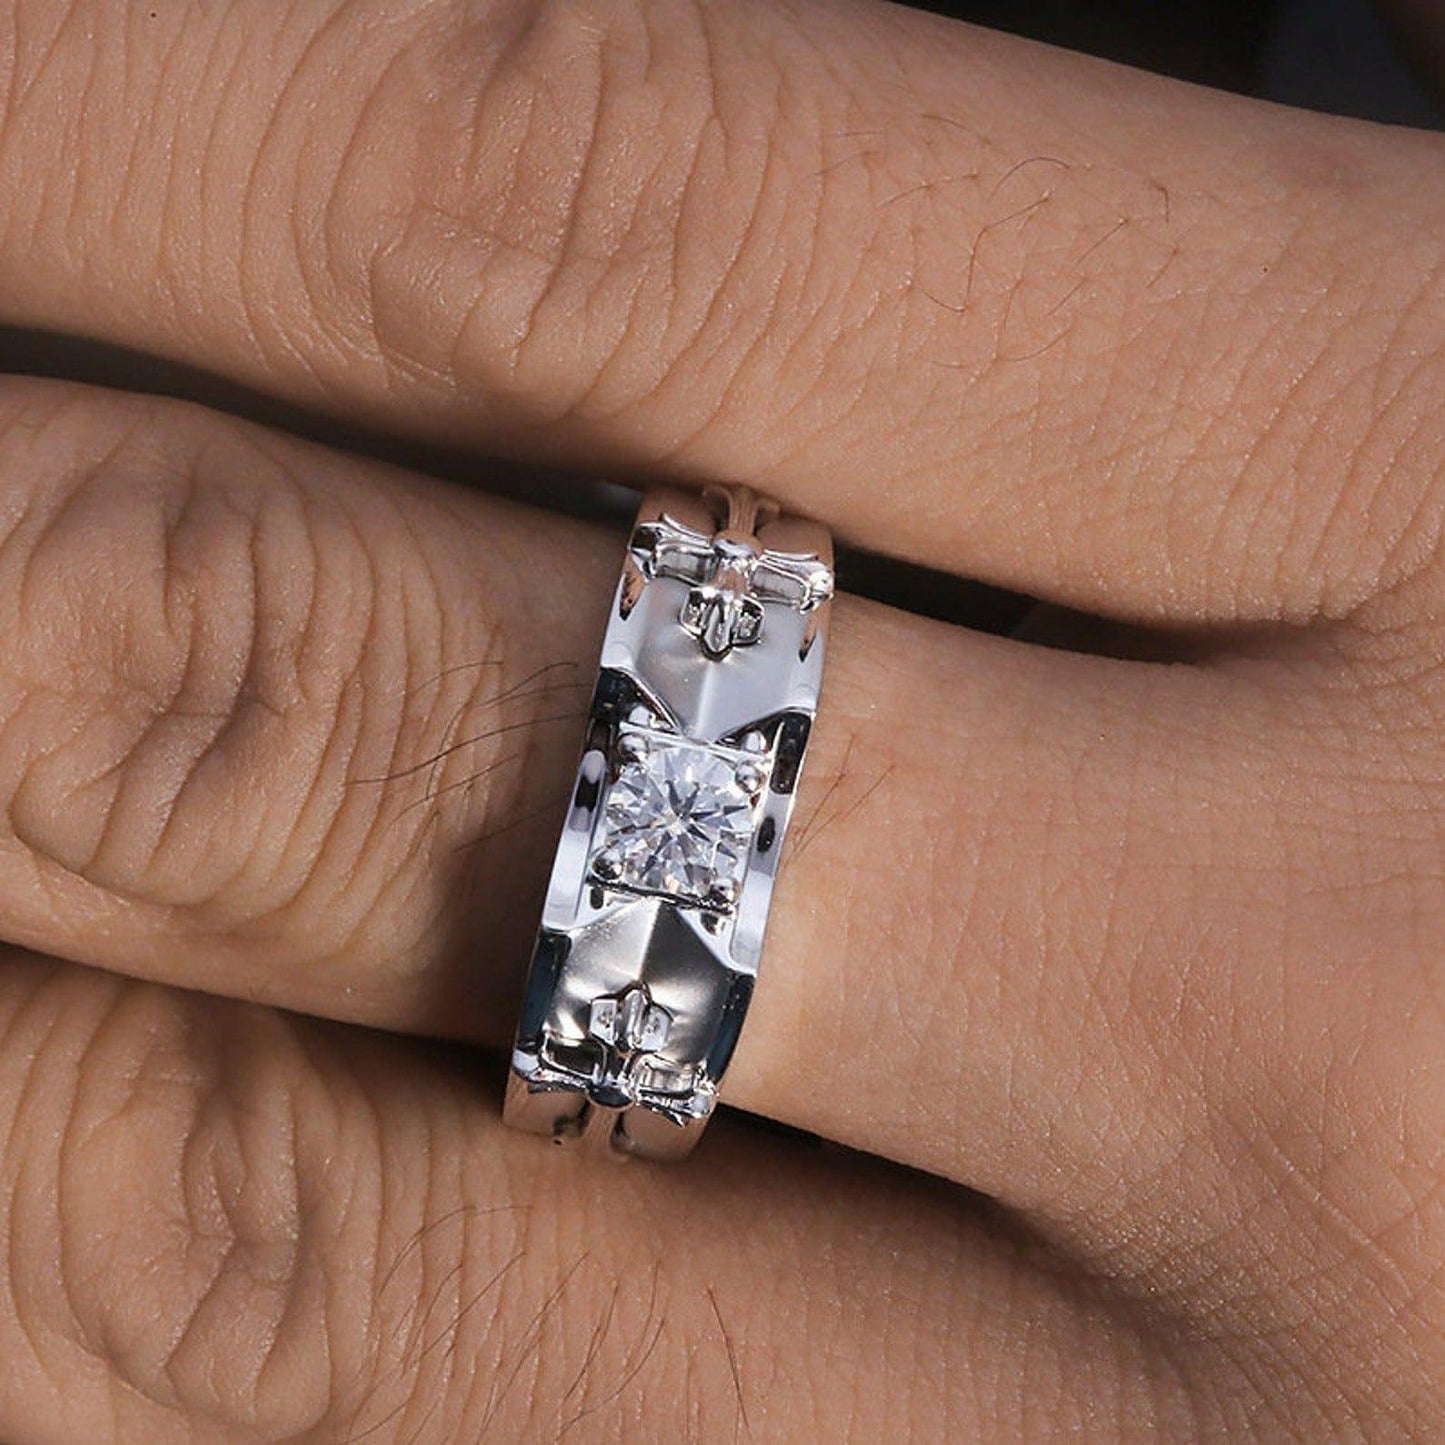 Impressive 0.5ct Moissanite Diamond with Crosses Stylish Men's White Gold Ring - JBR Jeweler